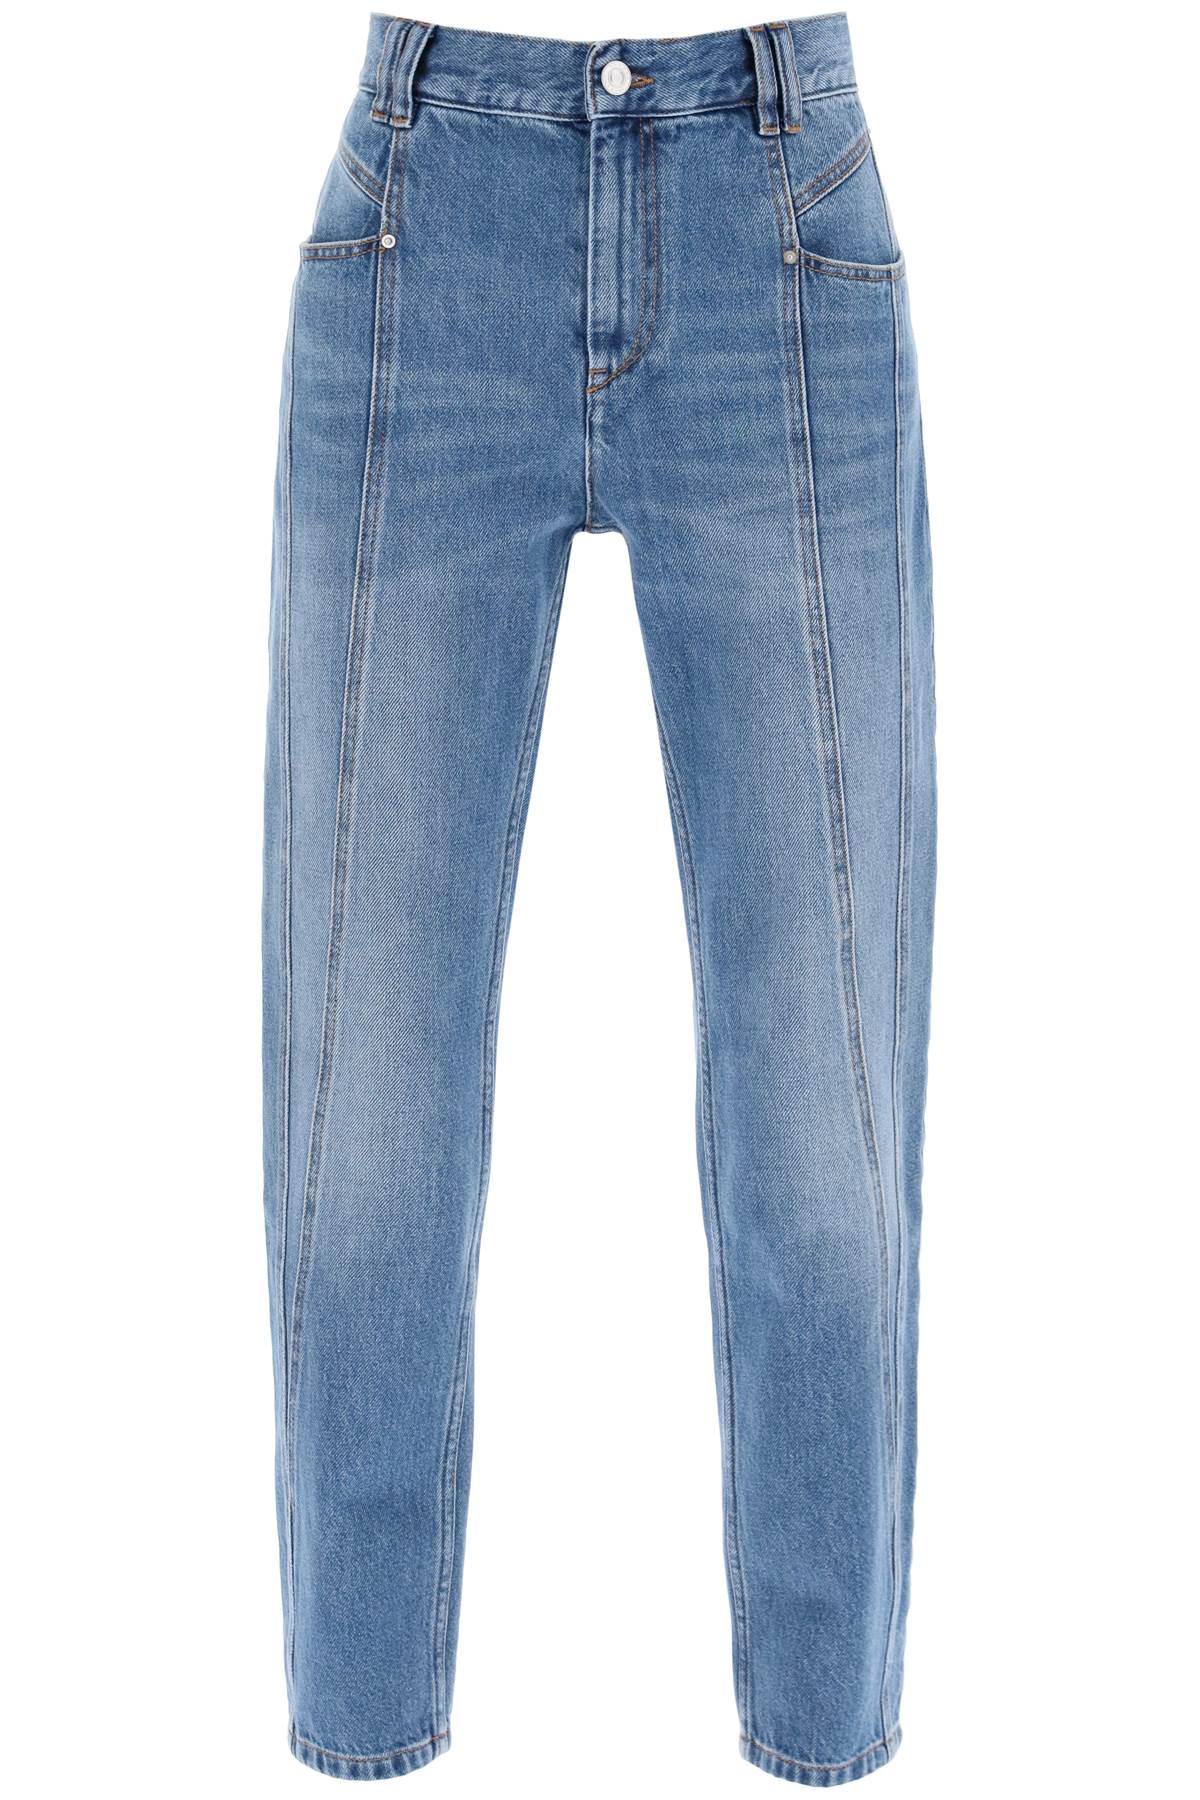 nikira jeans-0